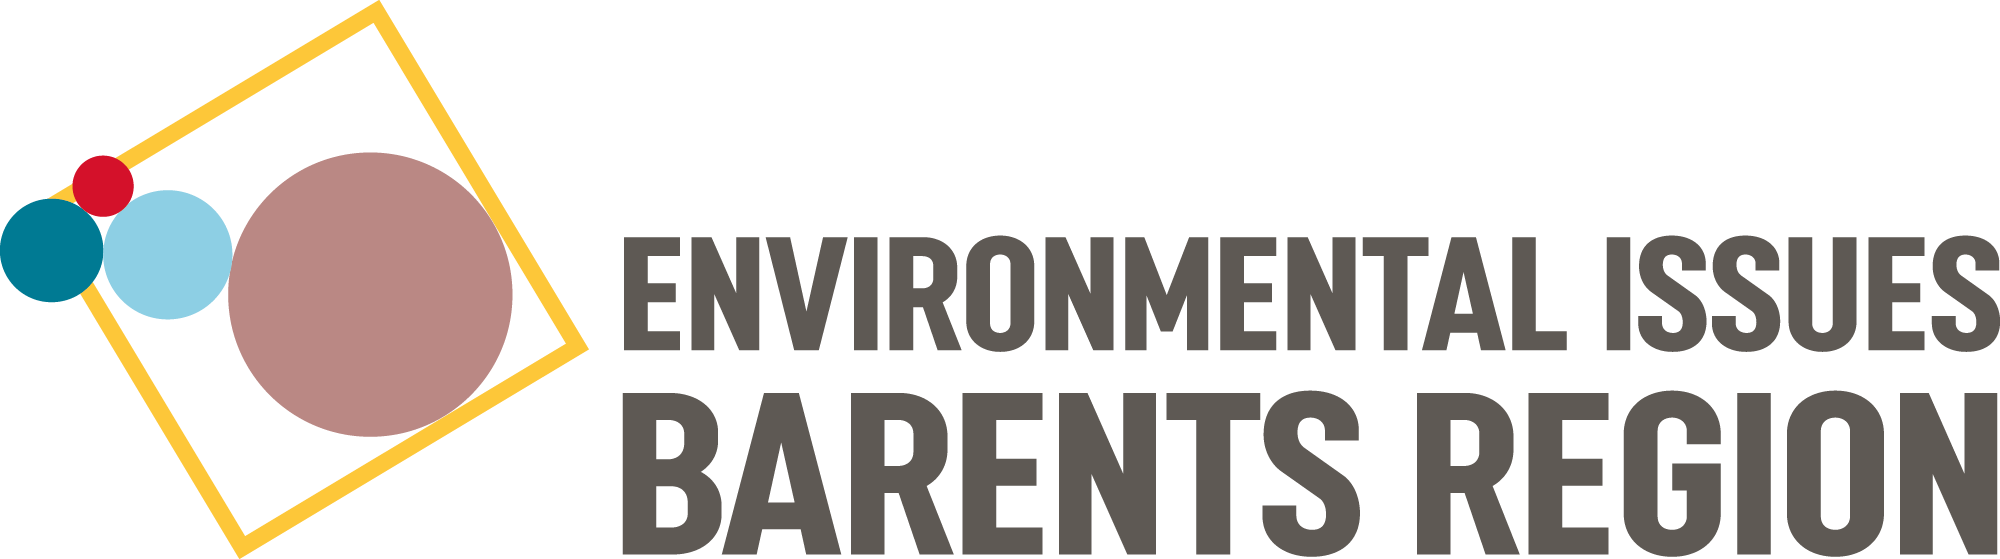 Barents Region Environmental Issues